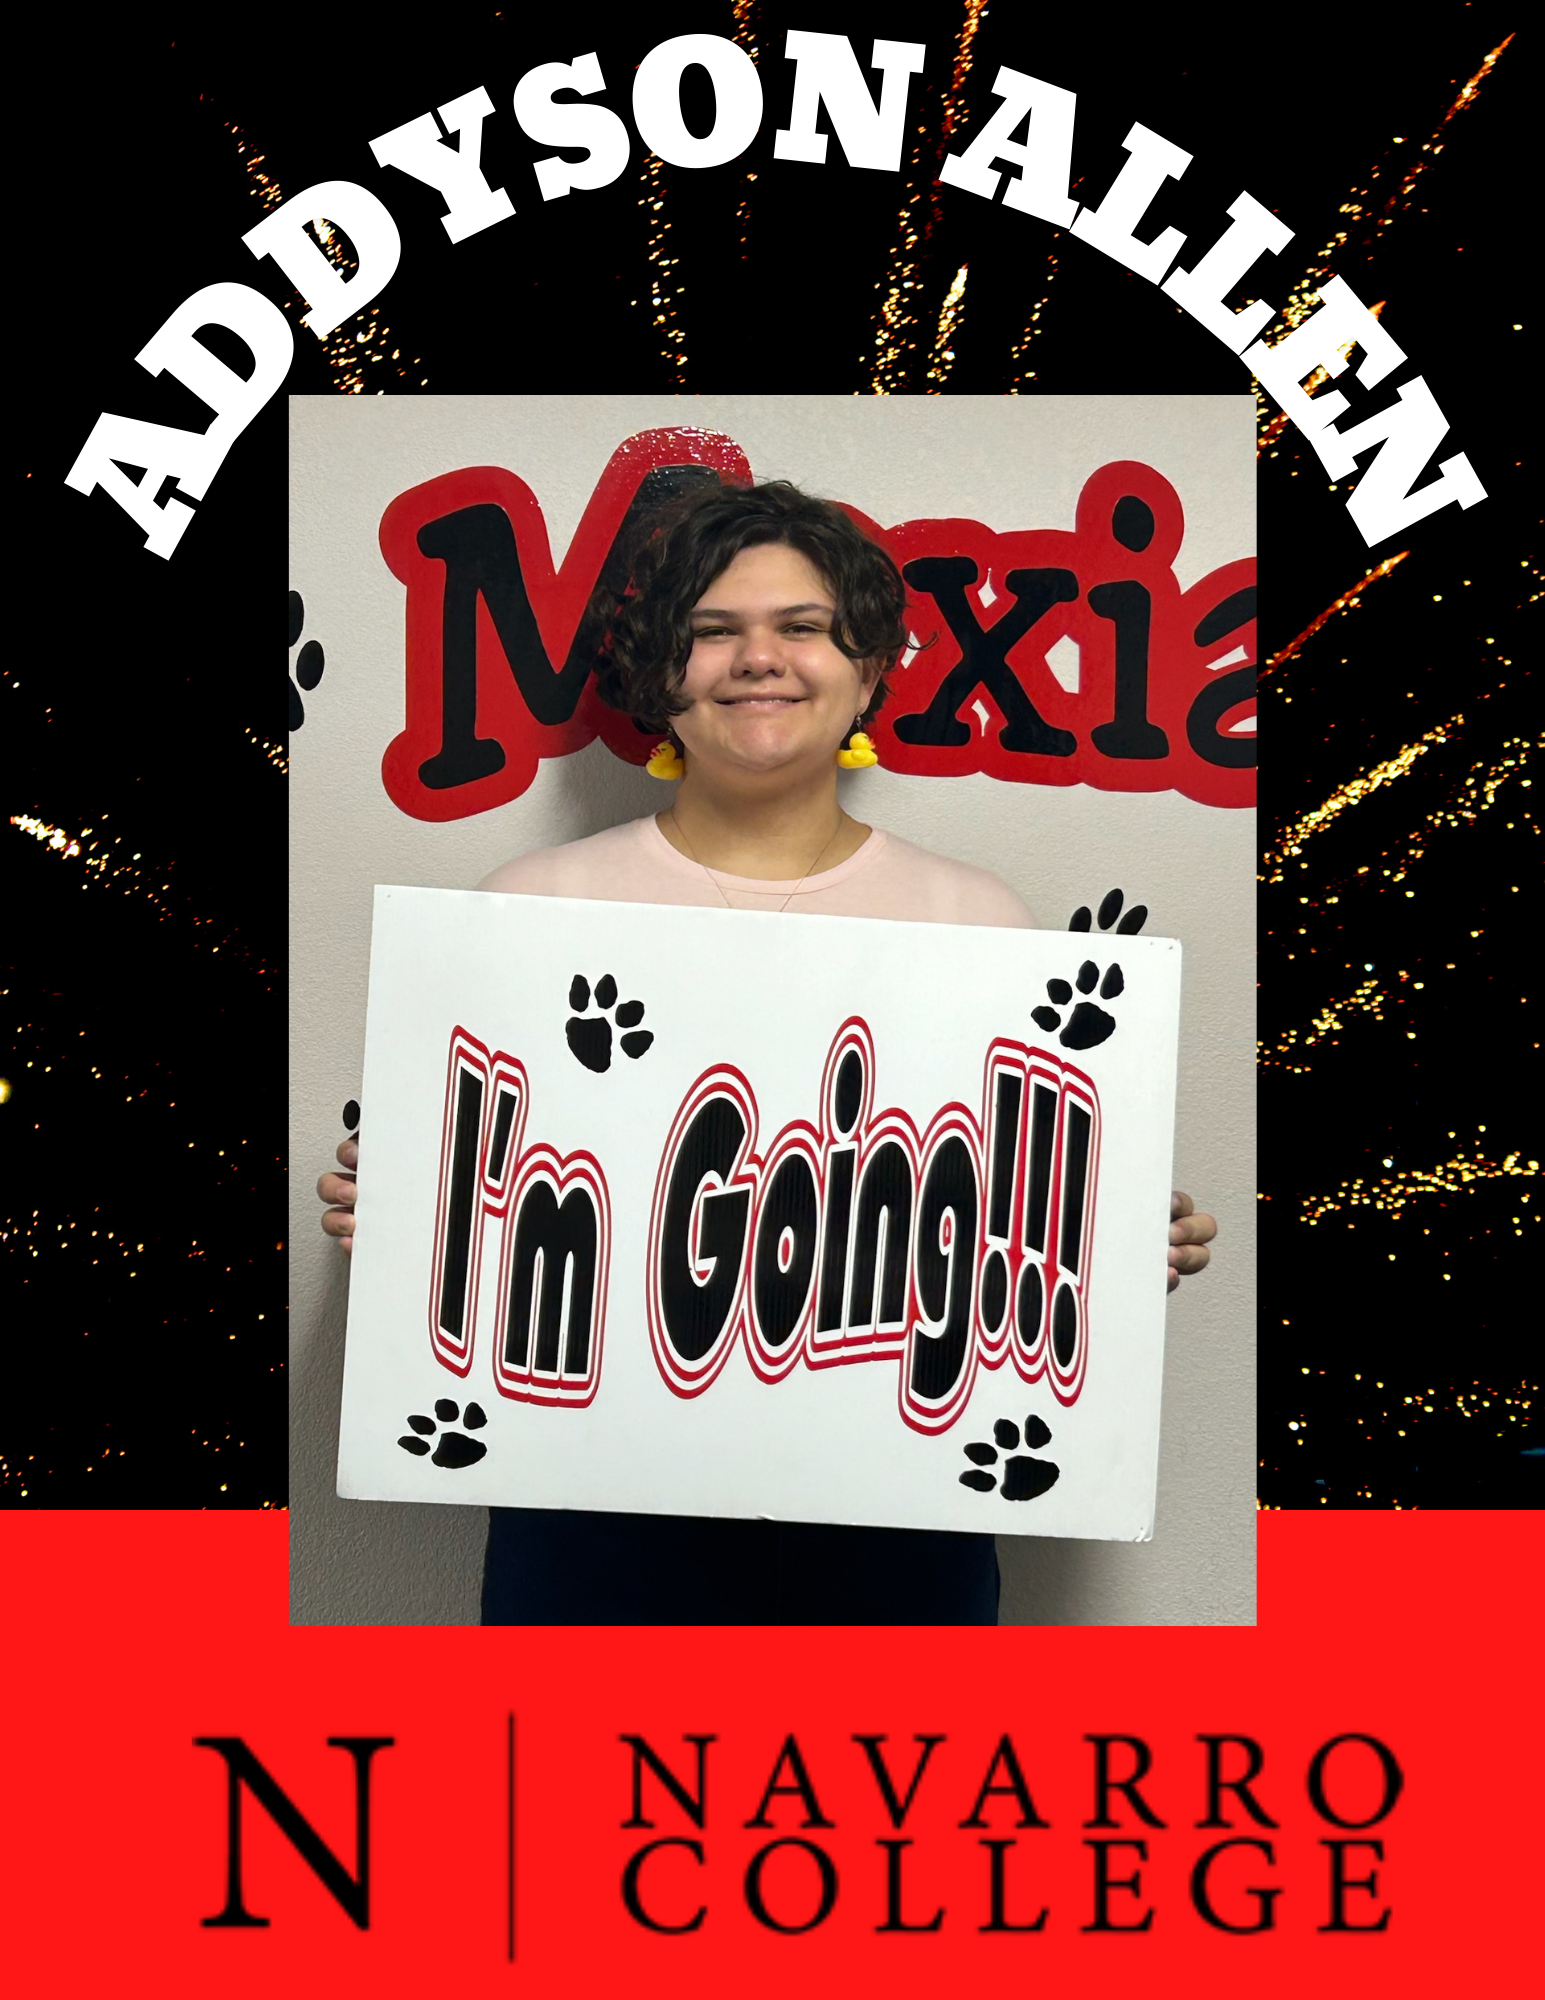 Addyson Allen - I'm Going! - Navarro College